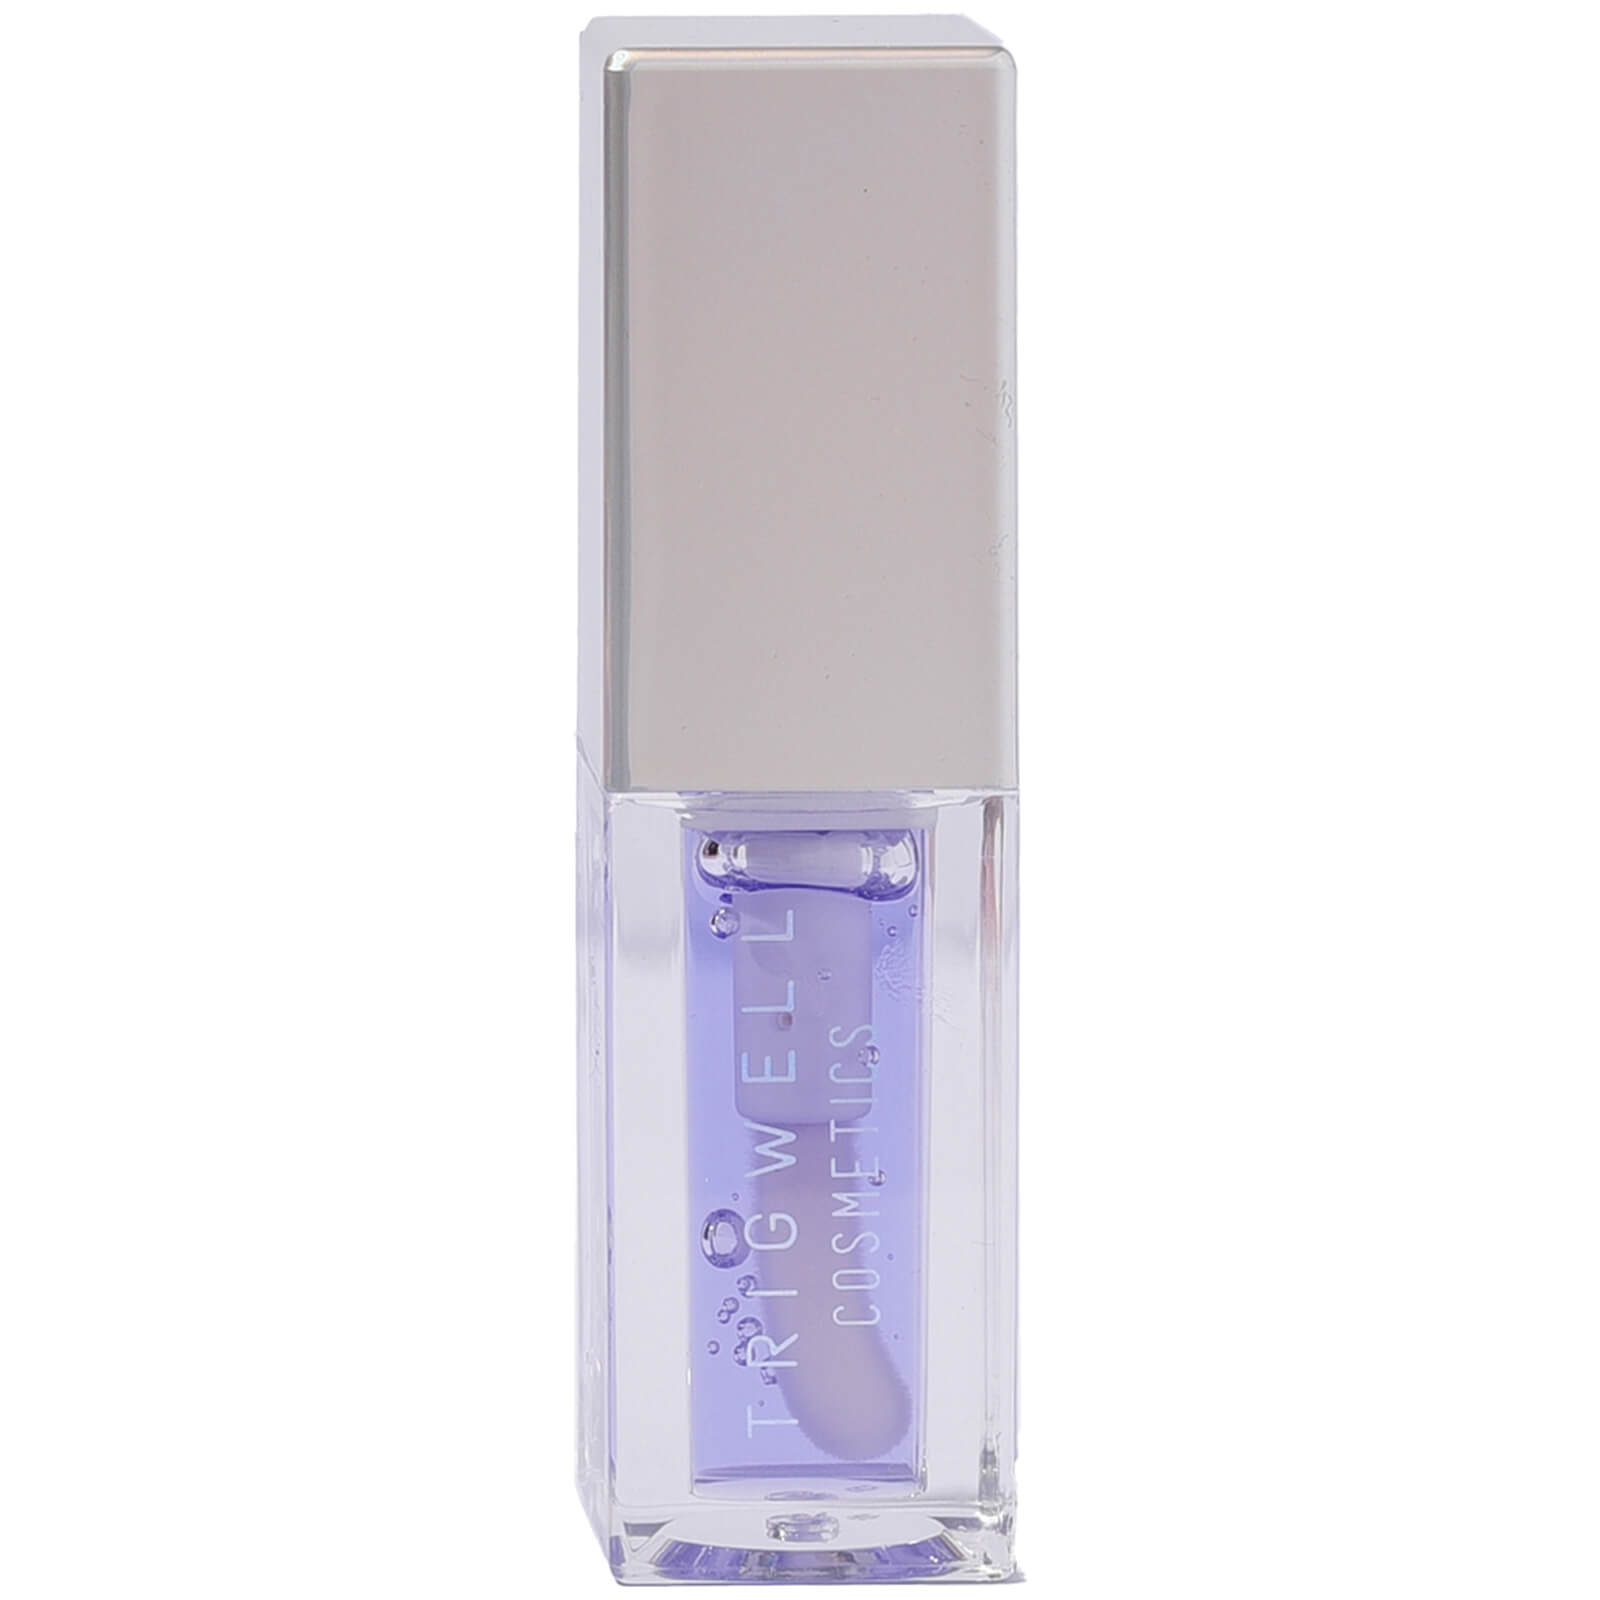 Trigwell Cosmetics Lip Oil 5ml (various Shades) - Grape